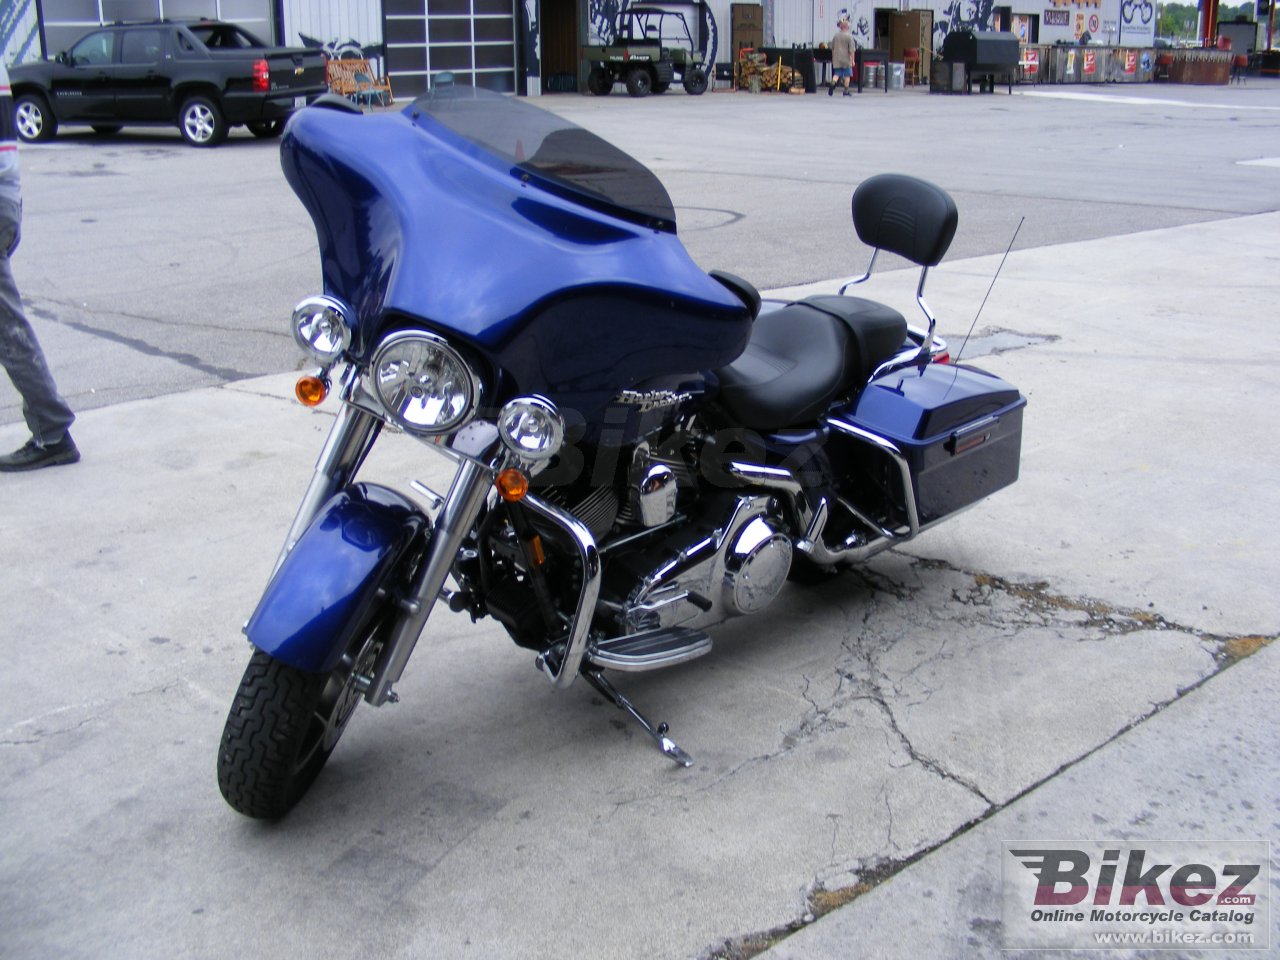 Harley-Davidson FLHTC Electra Glide Classic